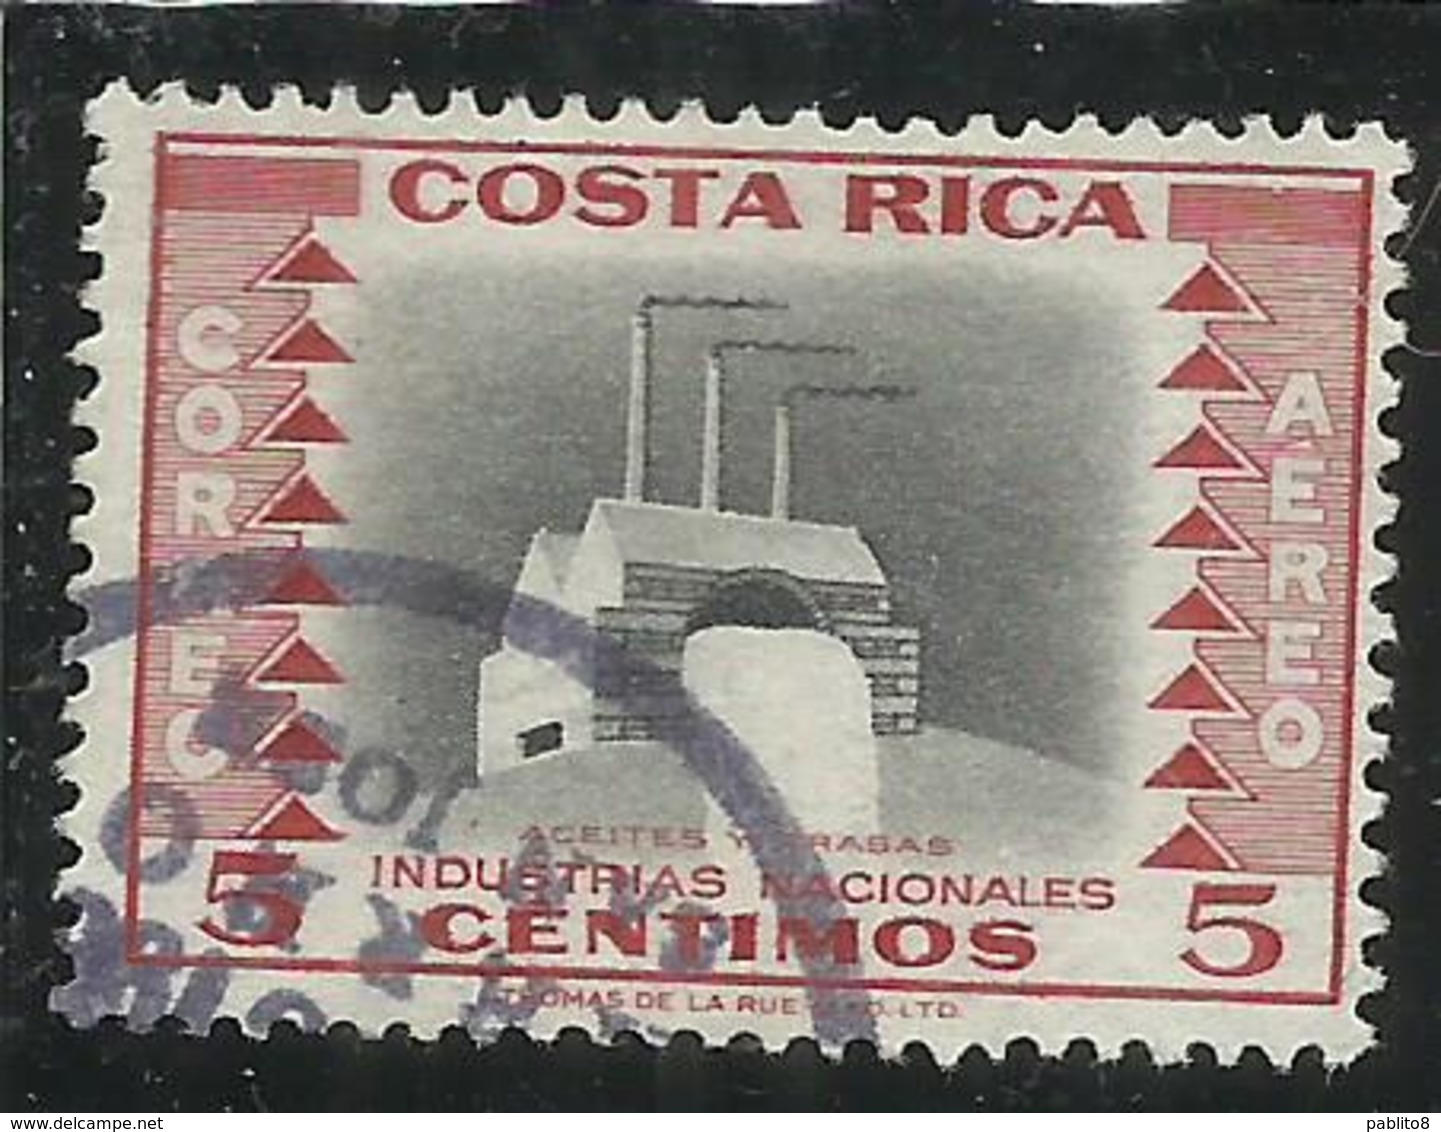 COSTA RICA 1954 AIR MAIL POSTA AEREA AEREO INDUSTRIES INDUSTRIAS NACIONALES REFINERY CENT 5c USATO USED OBLITERE' - Costa Rica